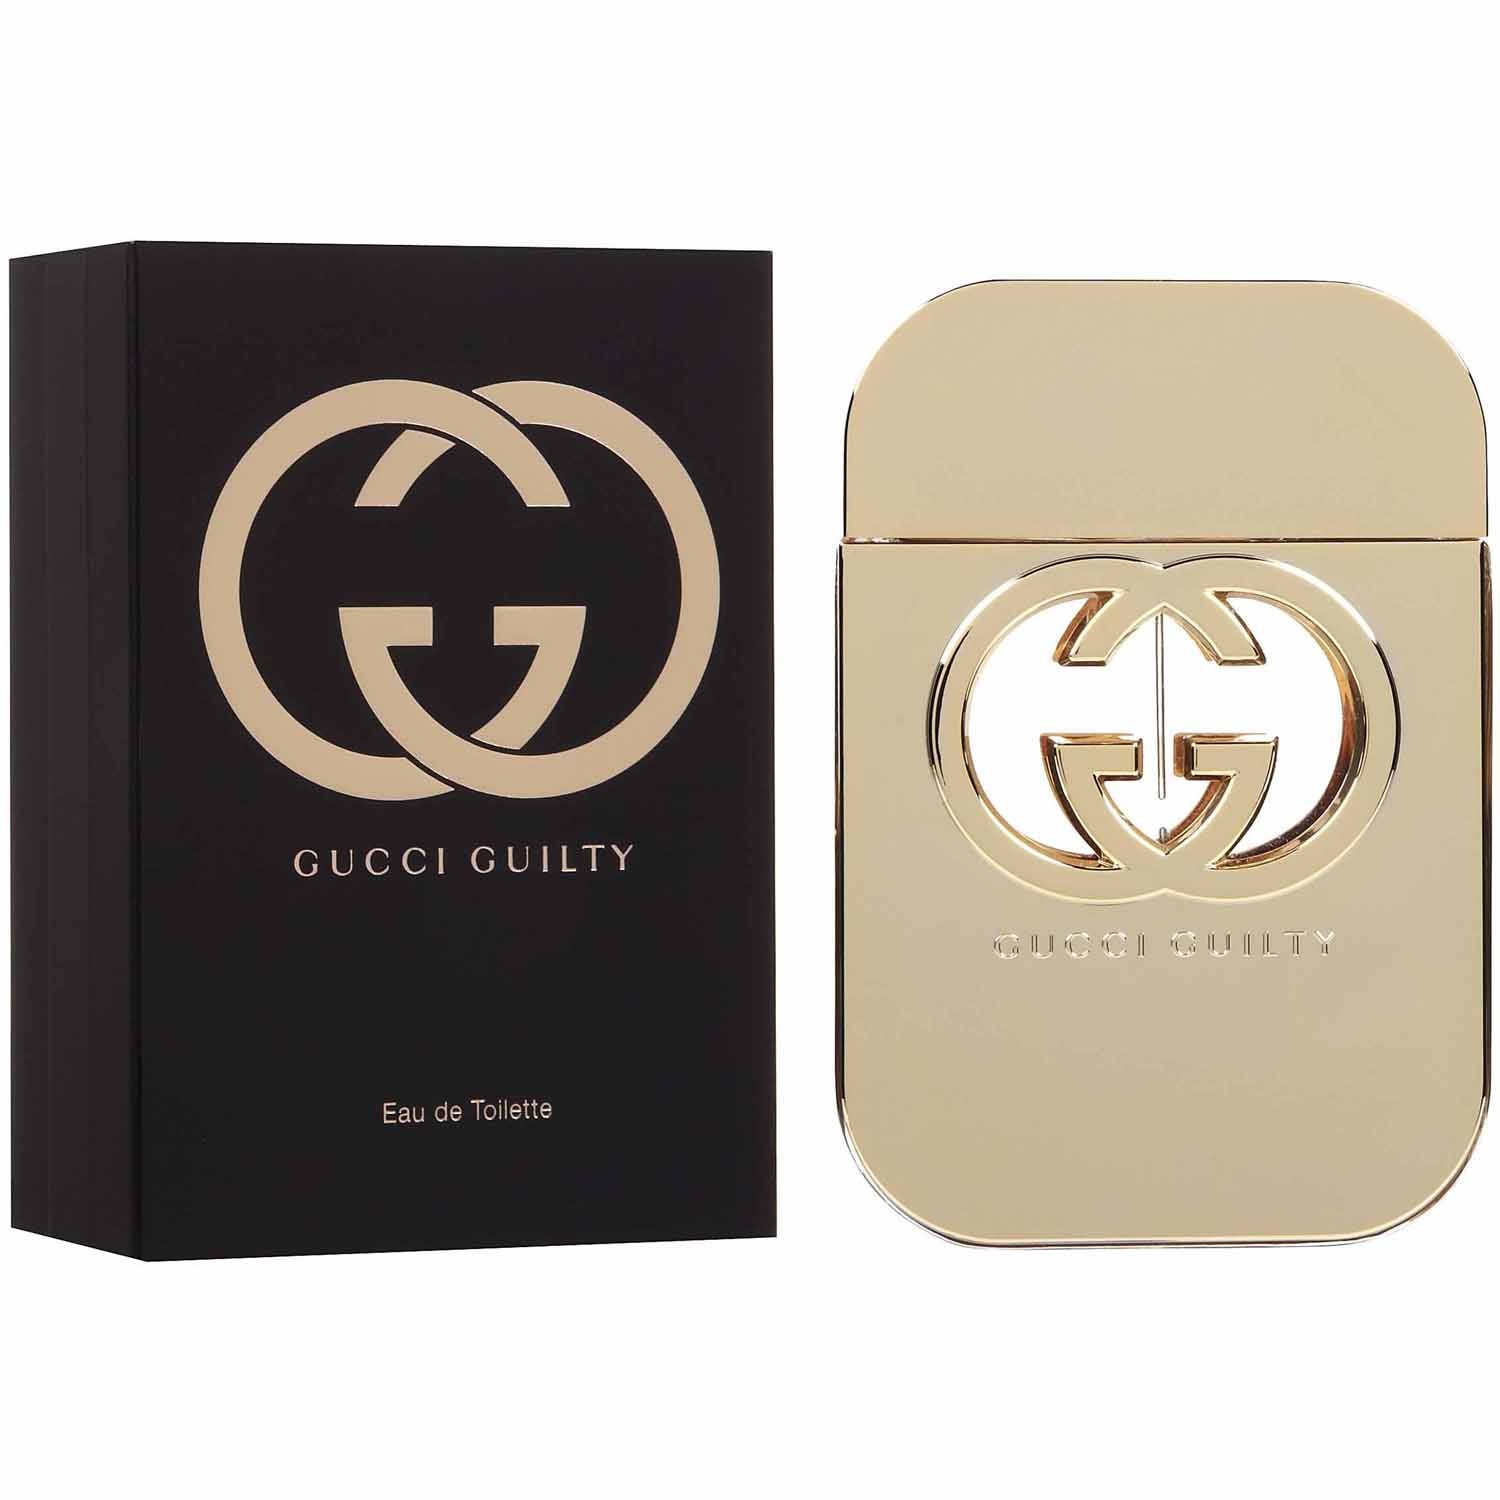 Review of Gucci Guilty By Gucci Eau-de-toilette Spray for Women